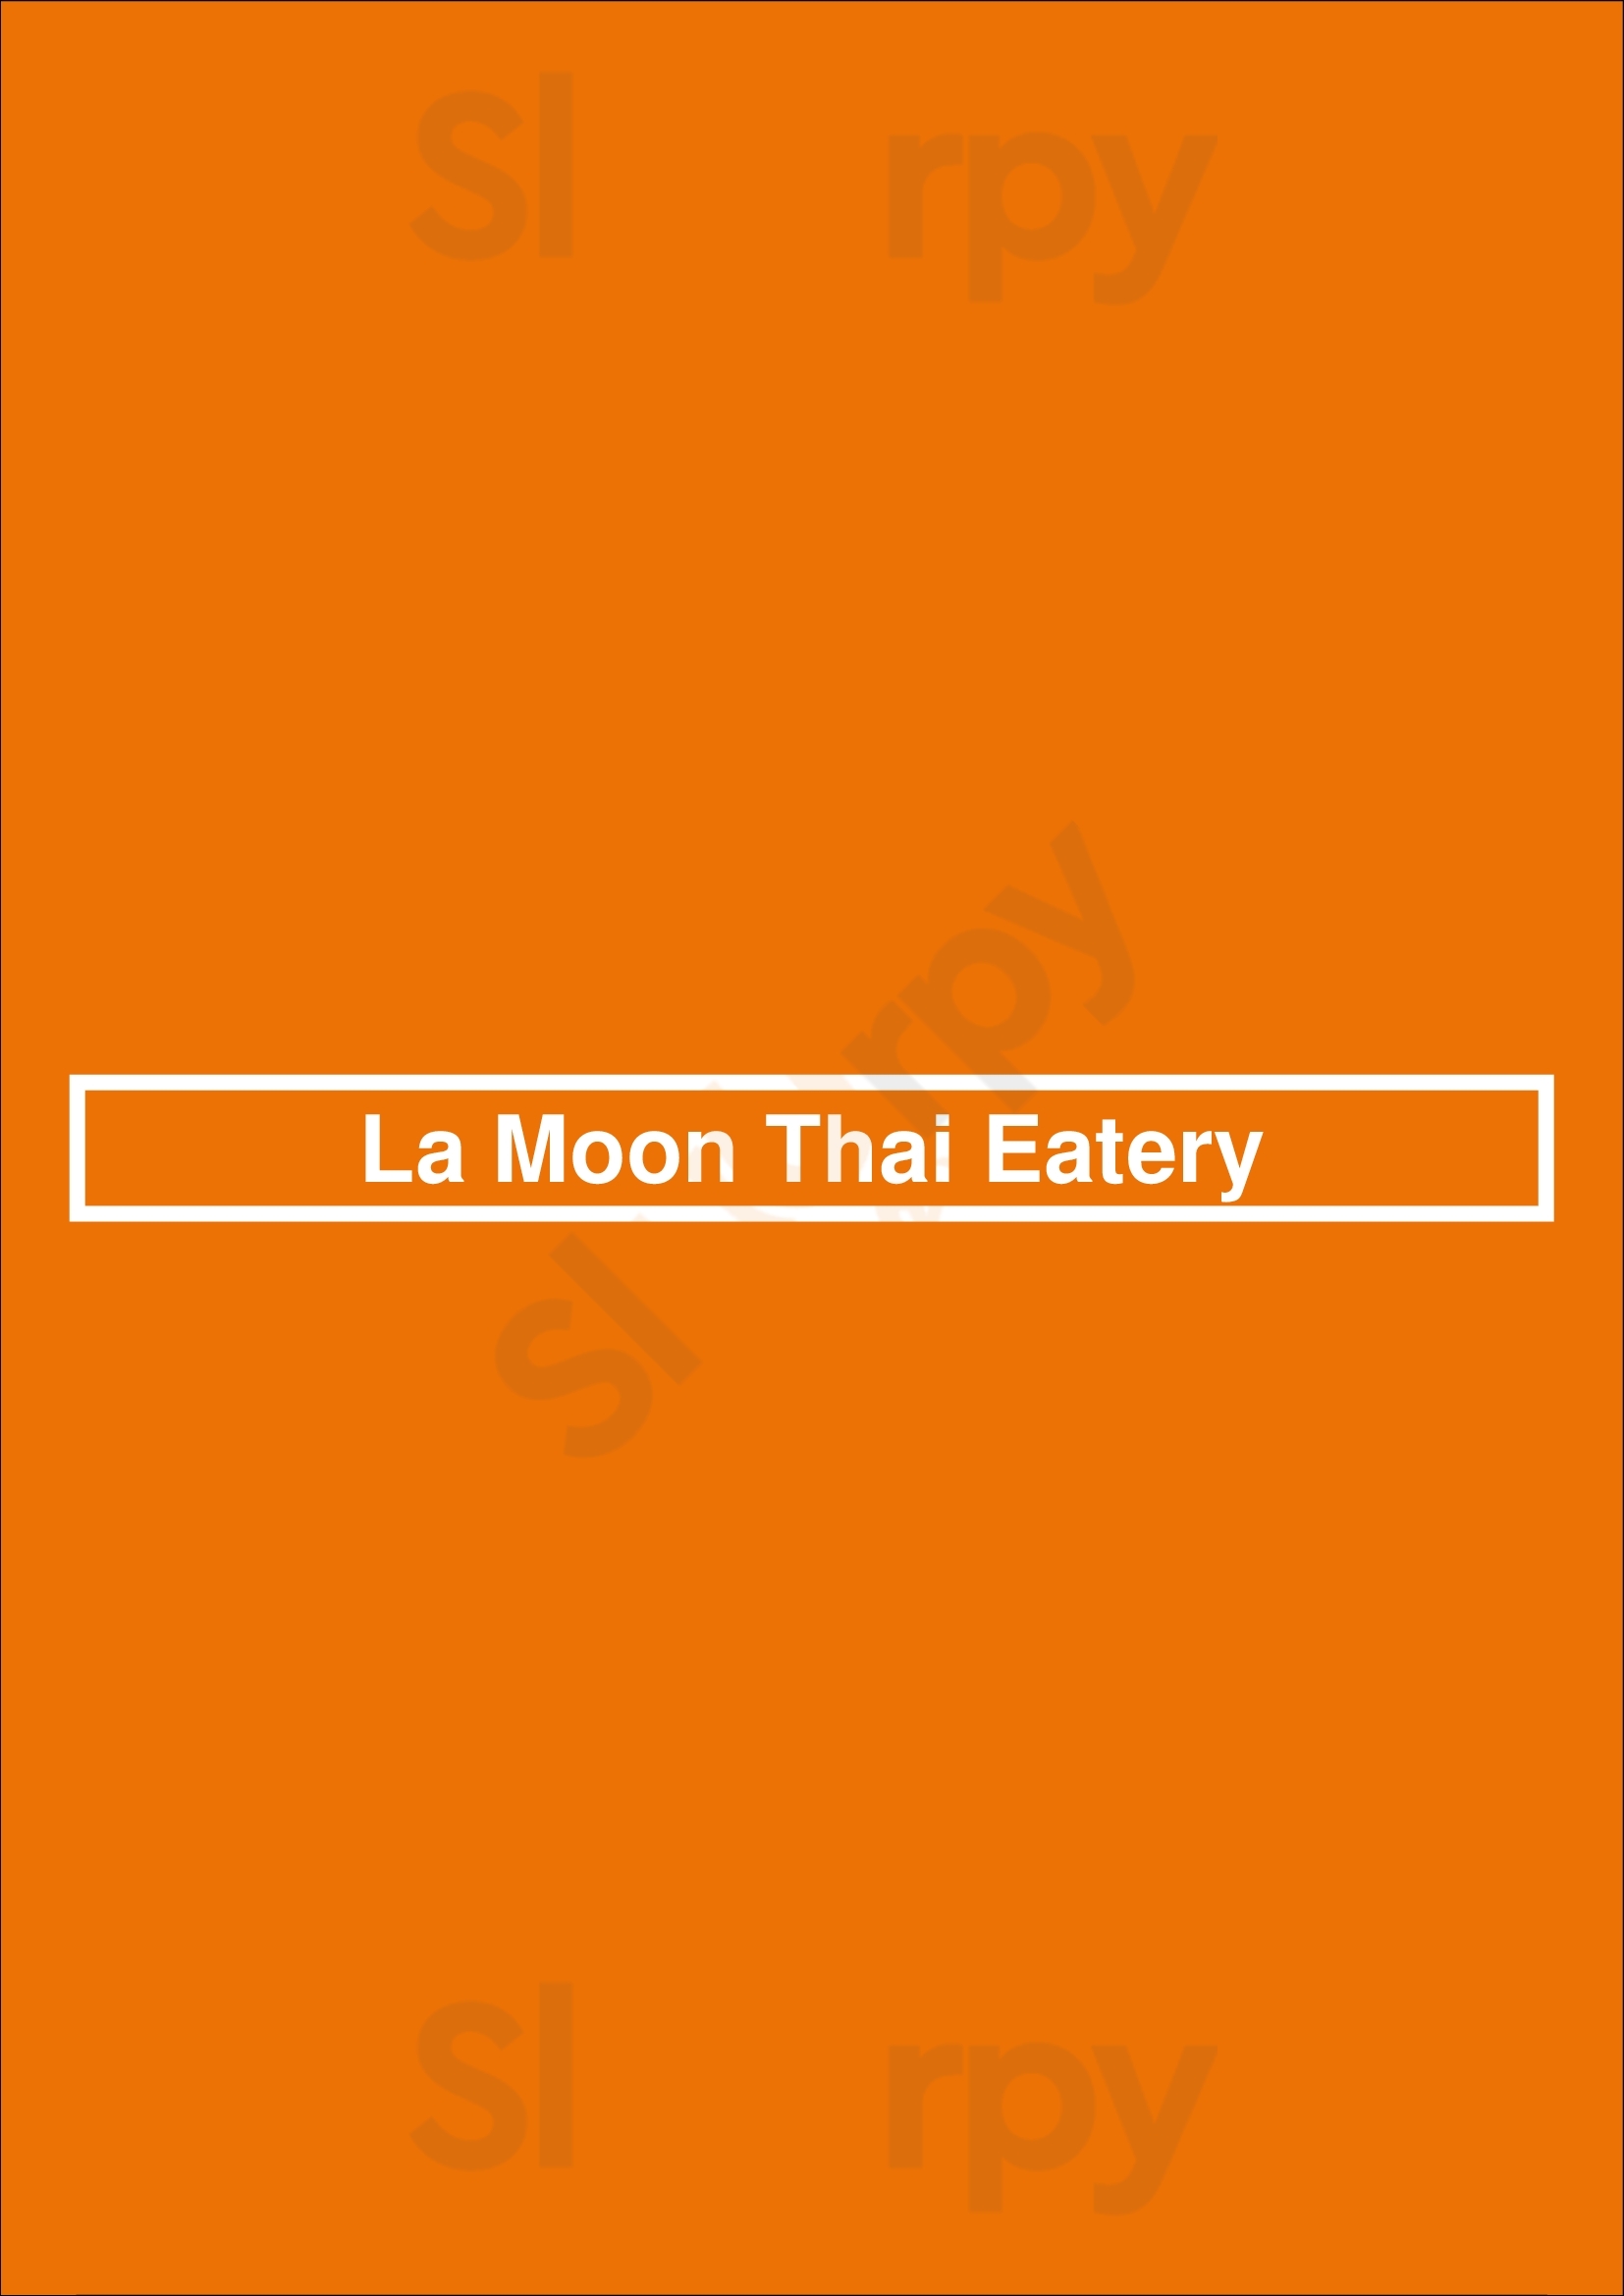 La Moon Thai Eatery San Diego Menu - 1